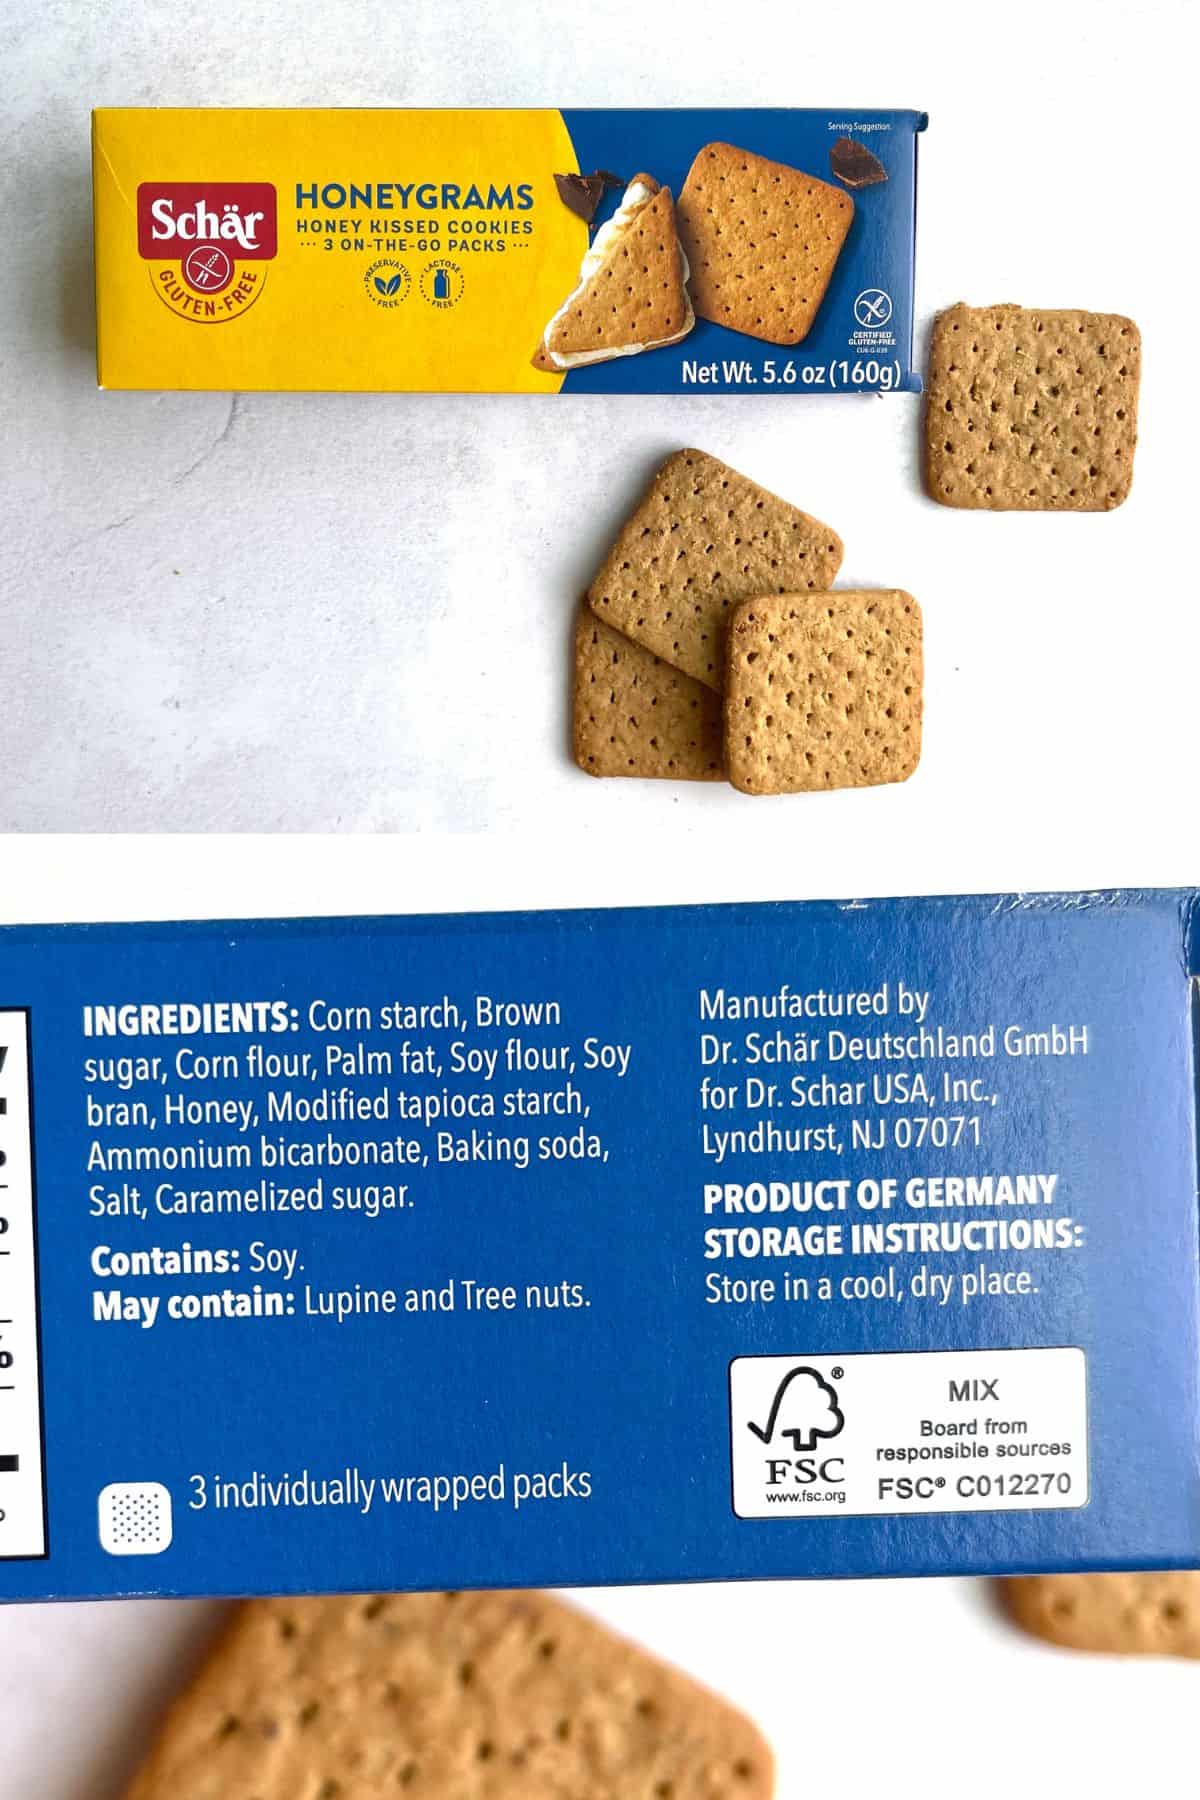 A box of Schar gluten-free graham crackers on a countertop